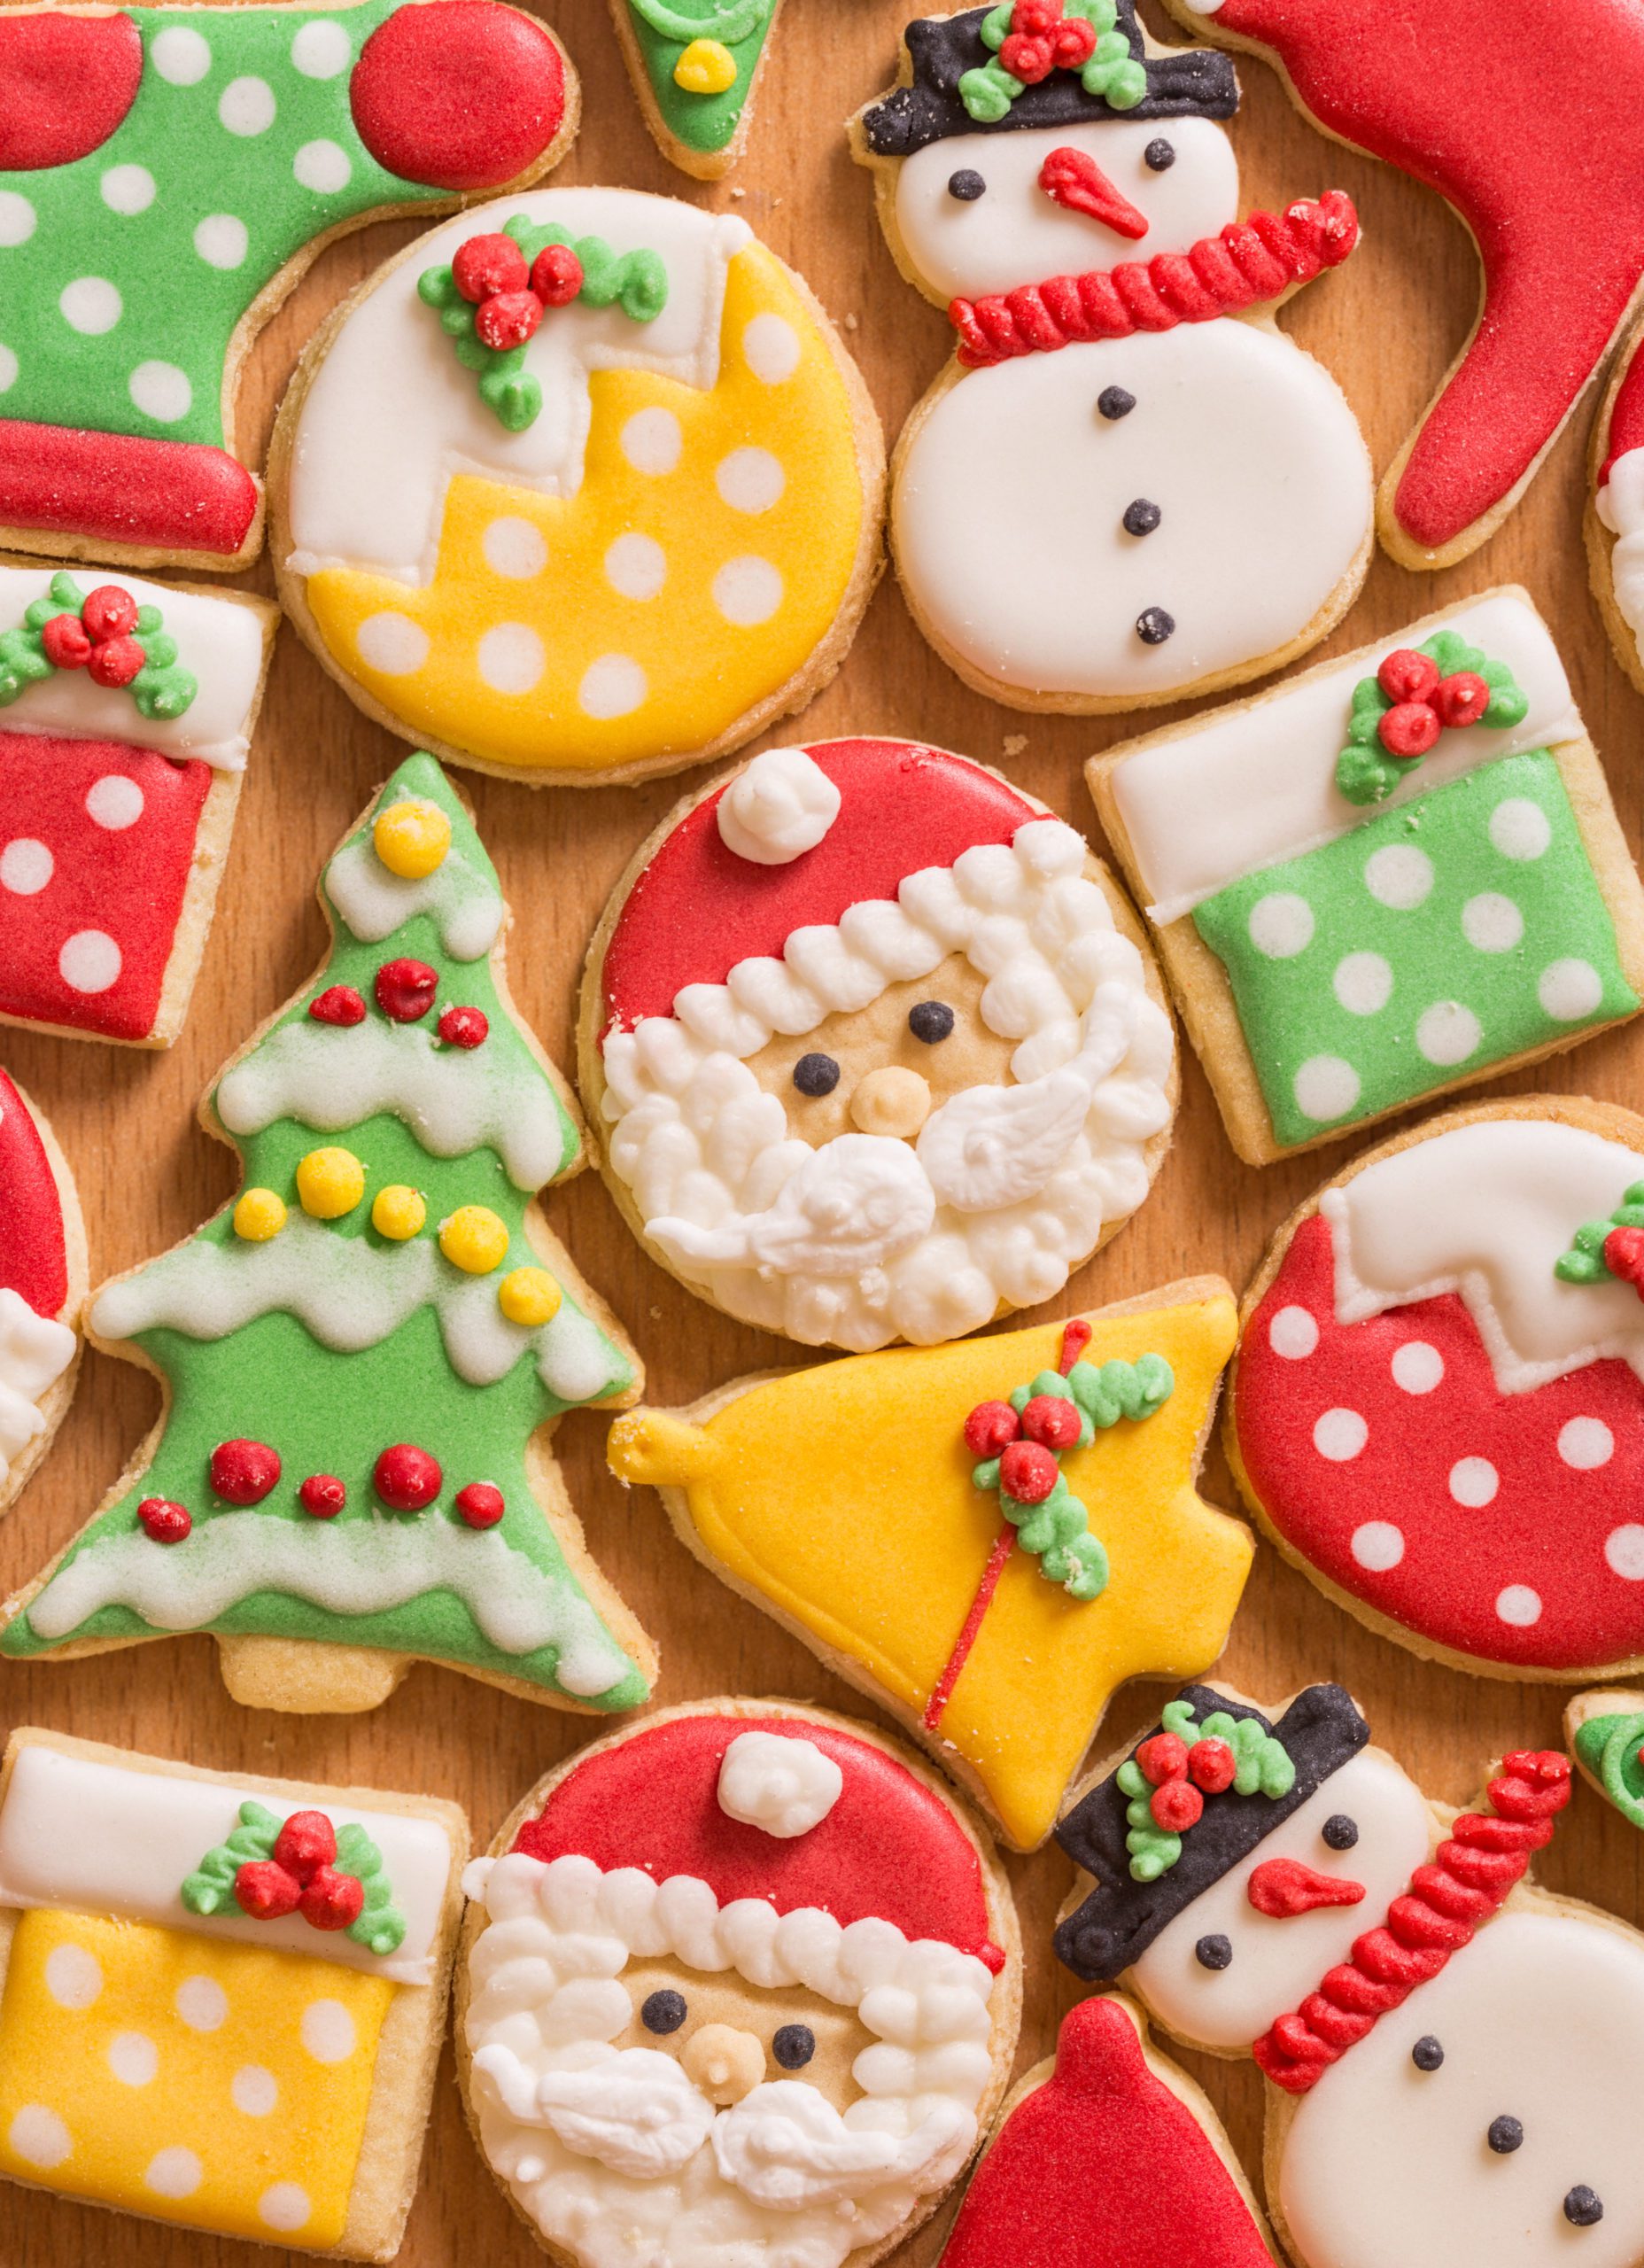 https://www.onceuponachef.com/images/2021/11/christmas-cookies-scaled.jpg